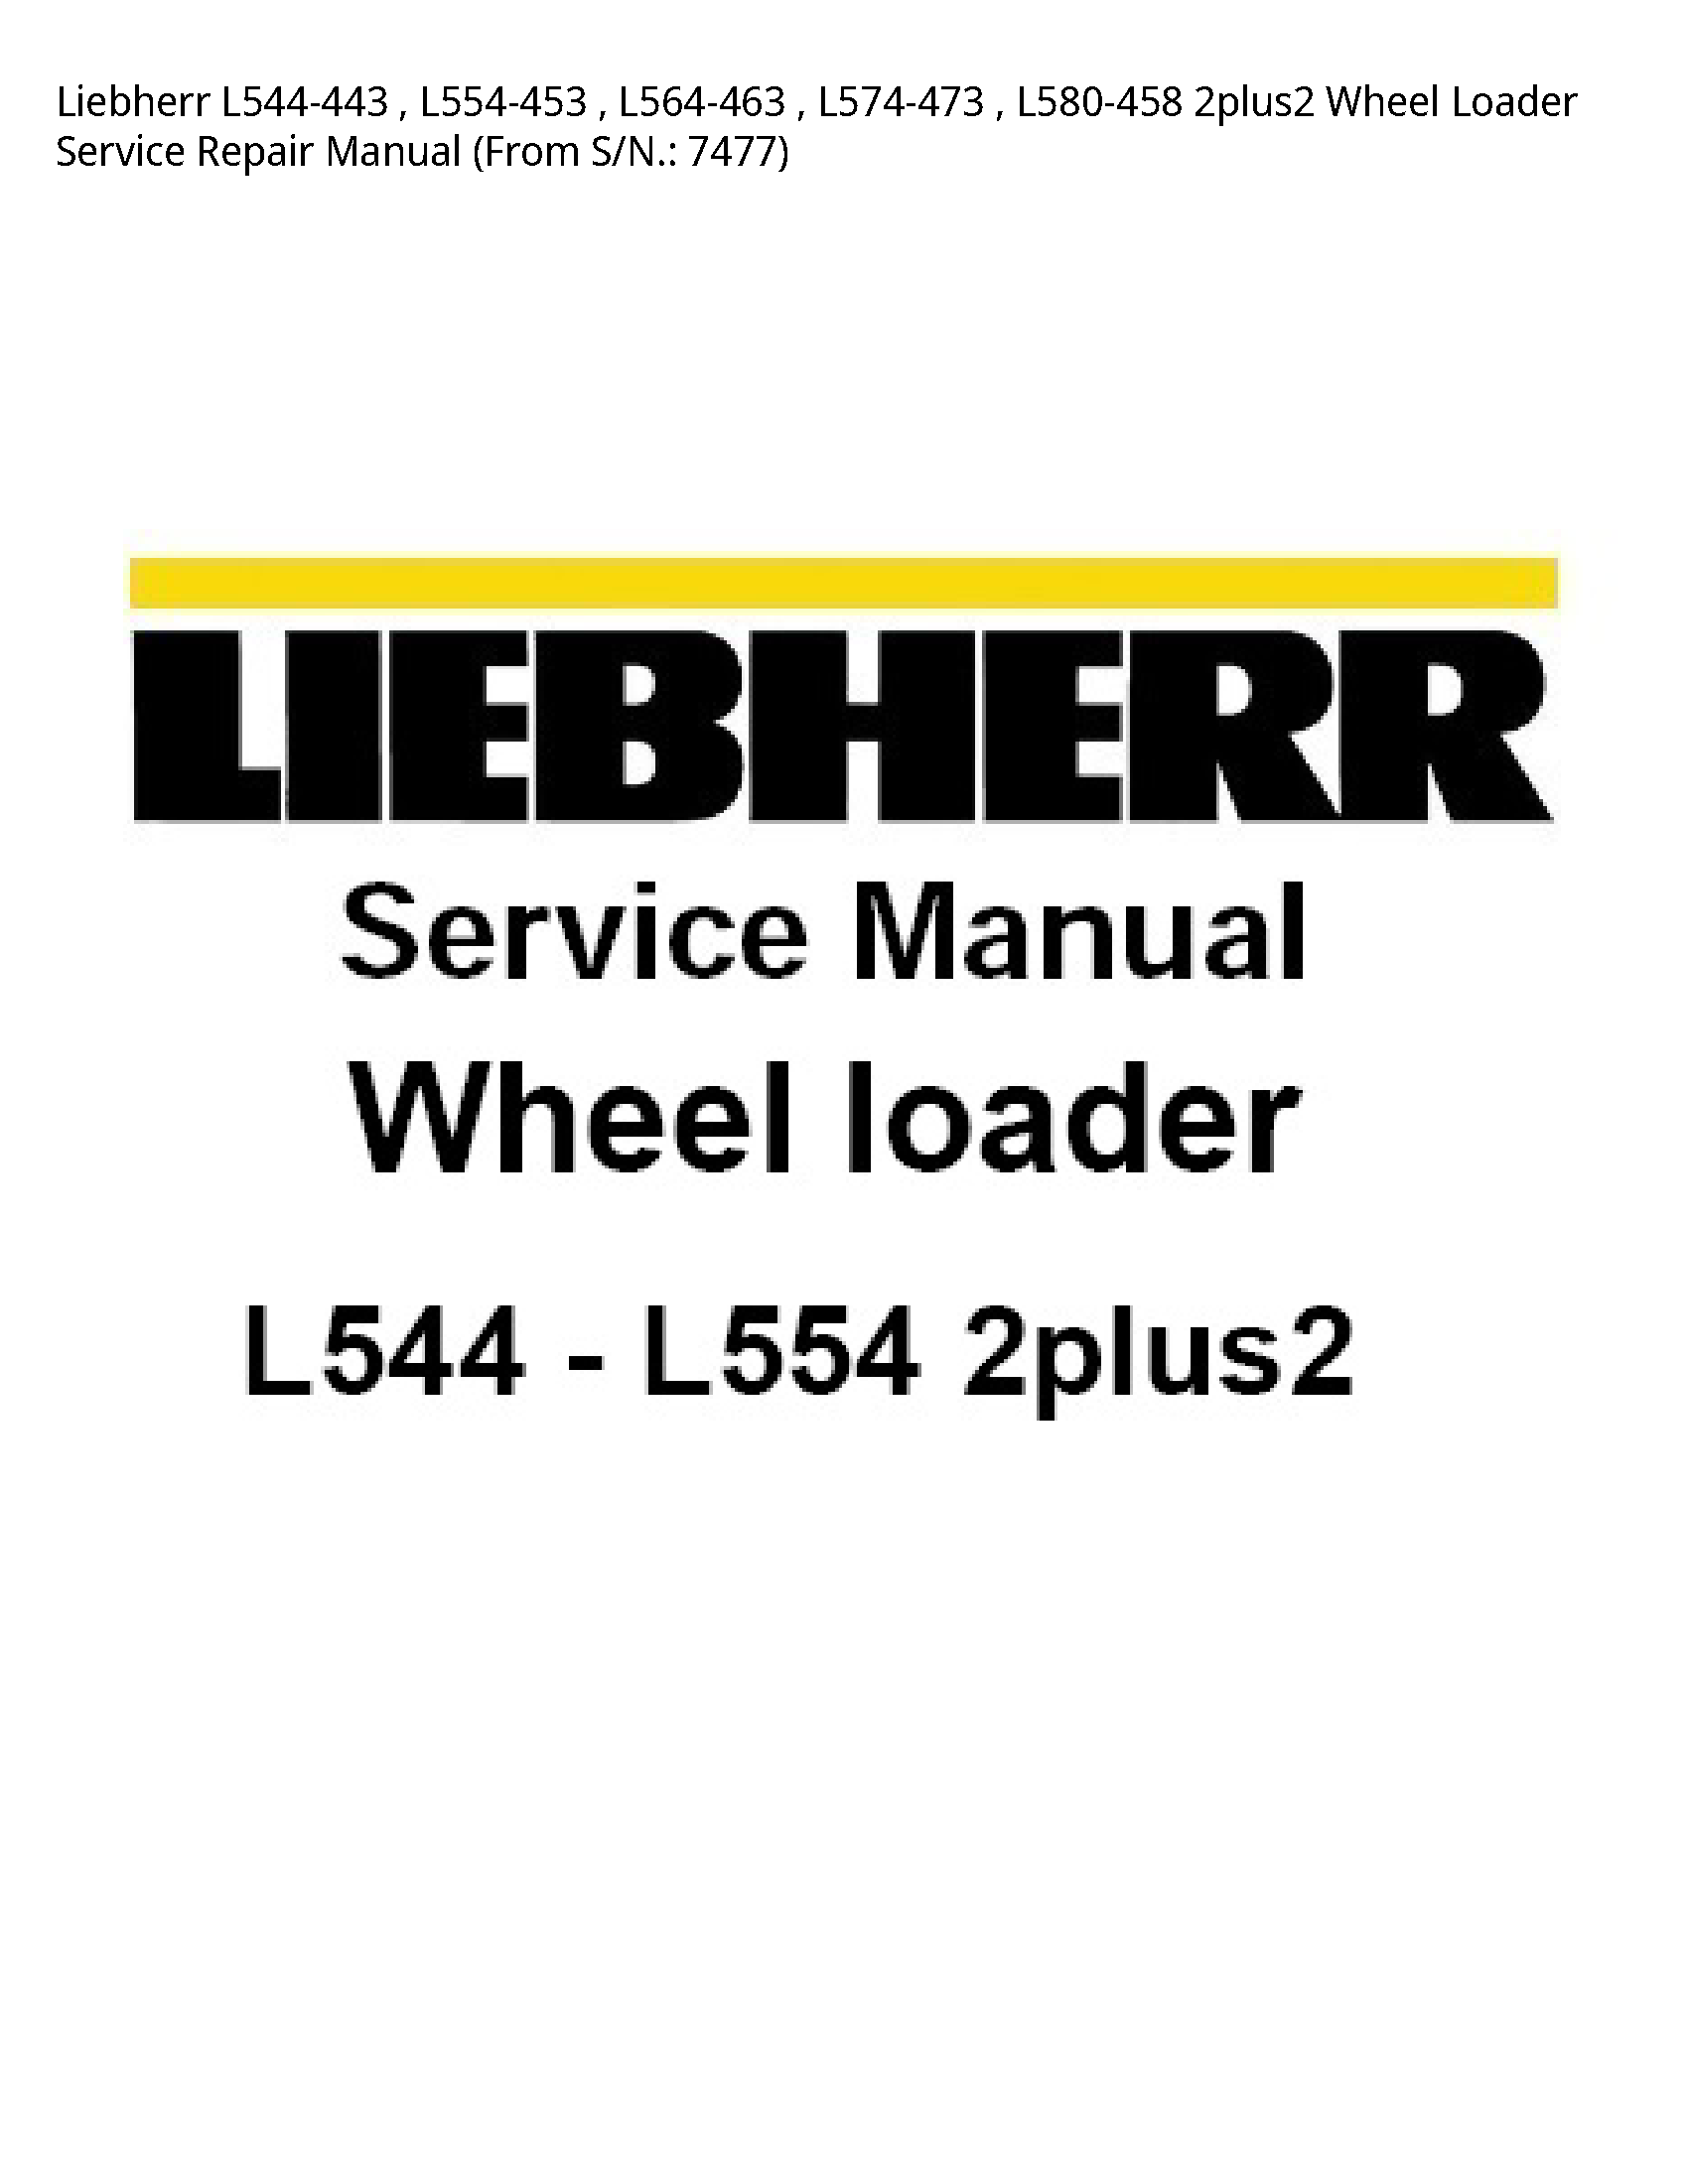 Liebherr L544-443 Wheel Loader manual